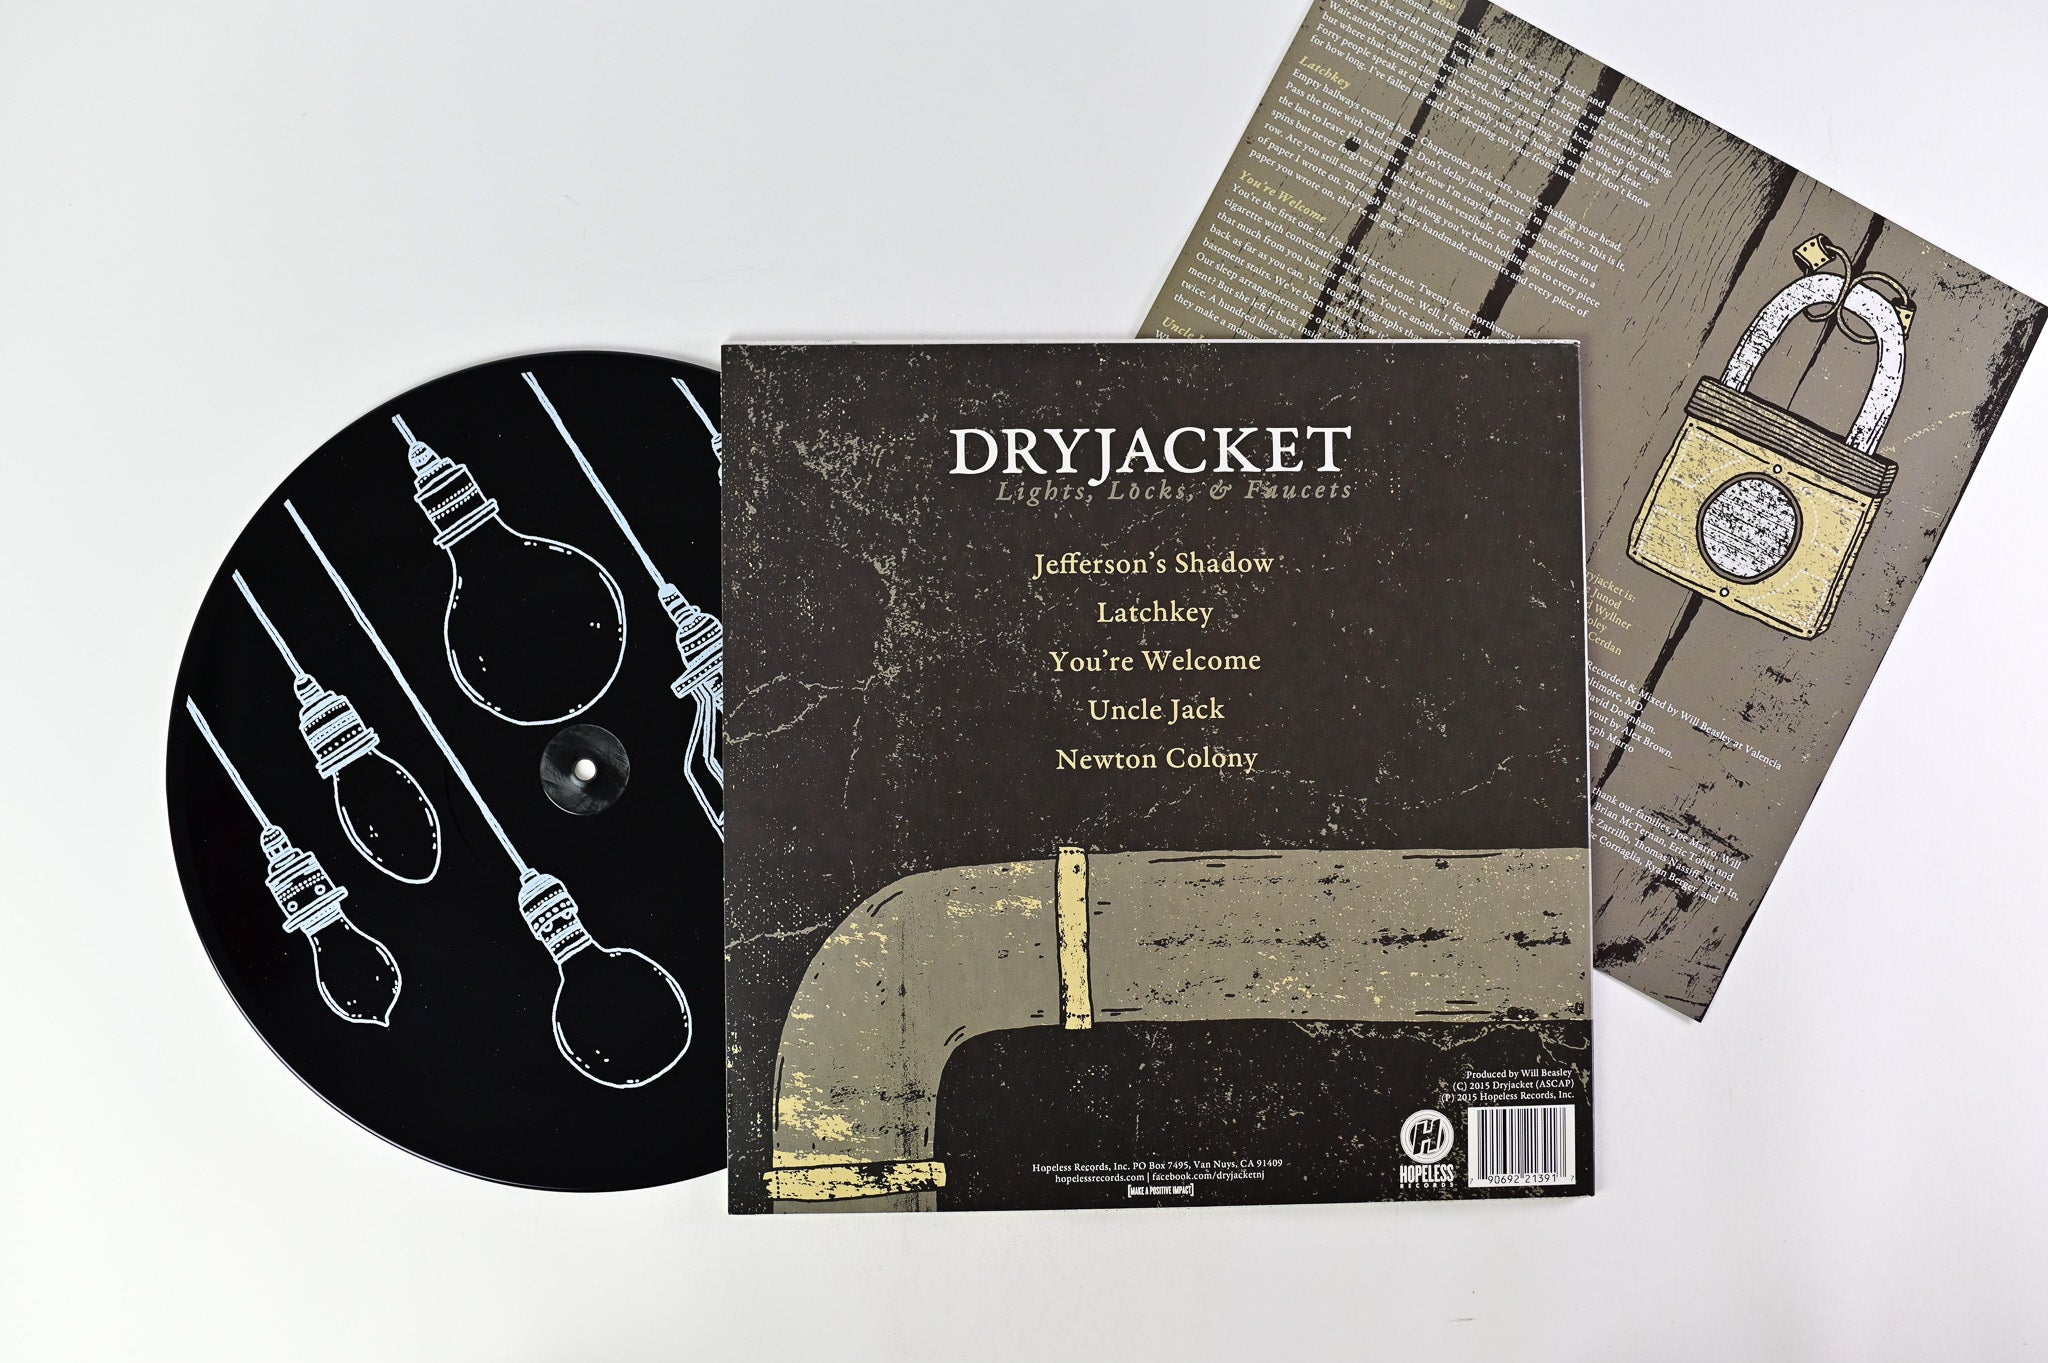 Dryjacket - Lights, Locks, & Faucets EP on Hopeless Records